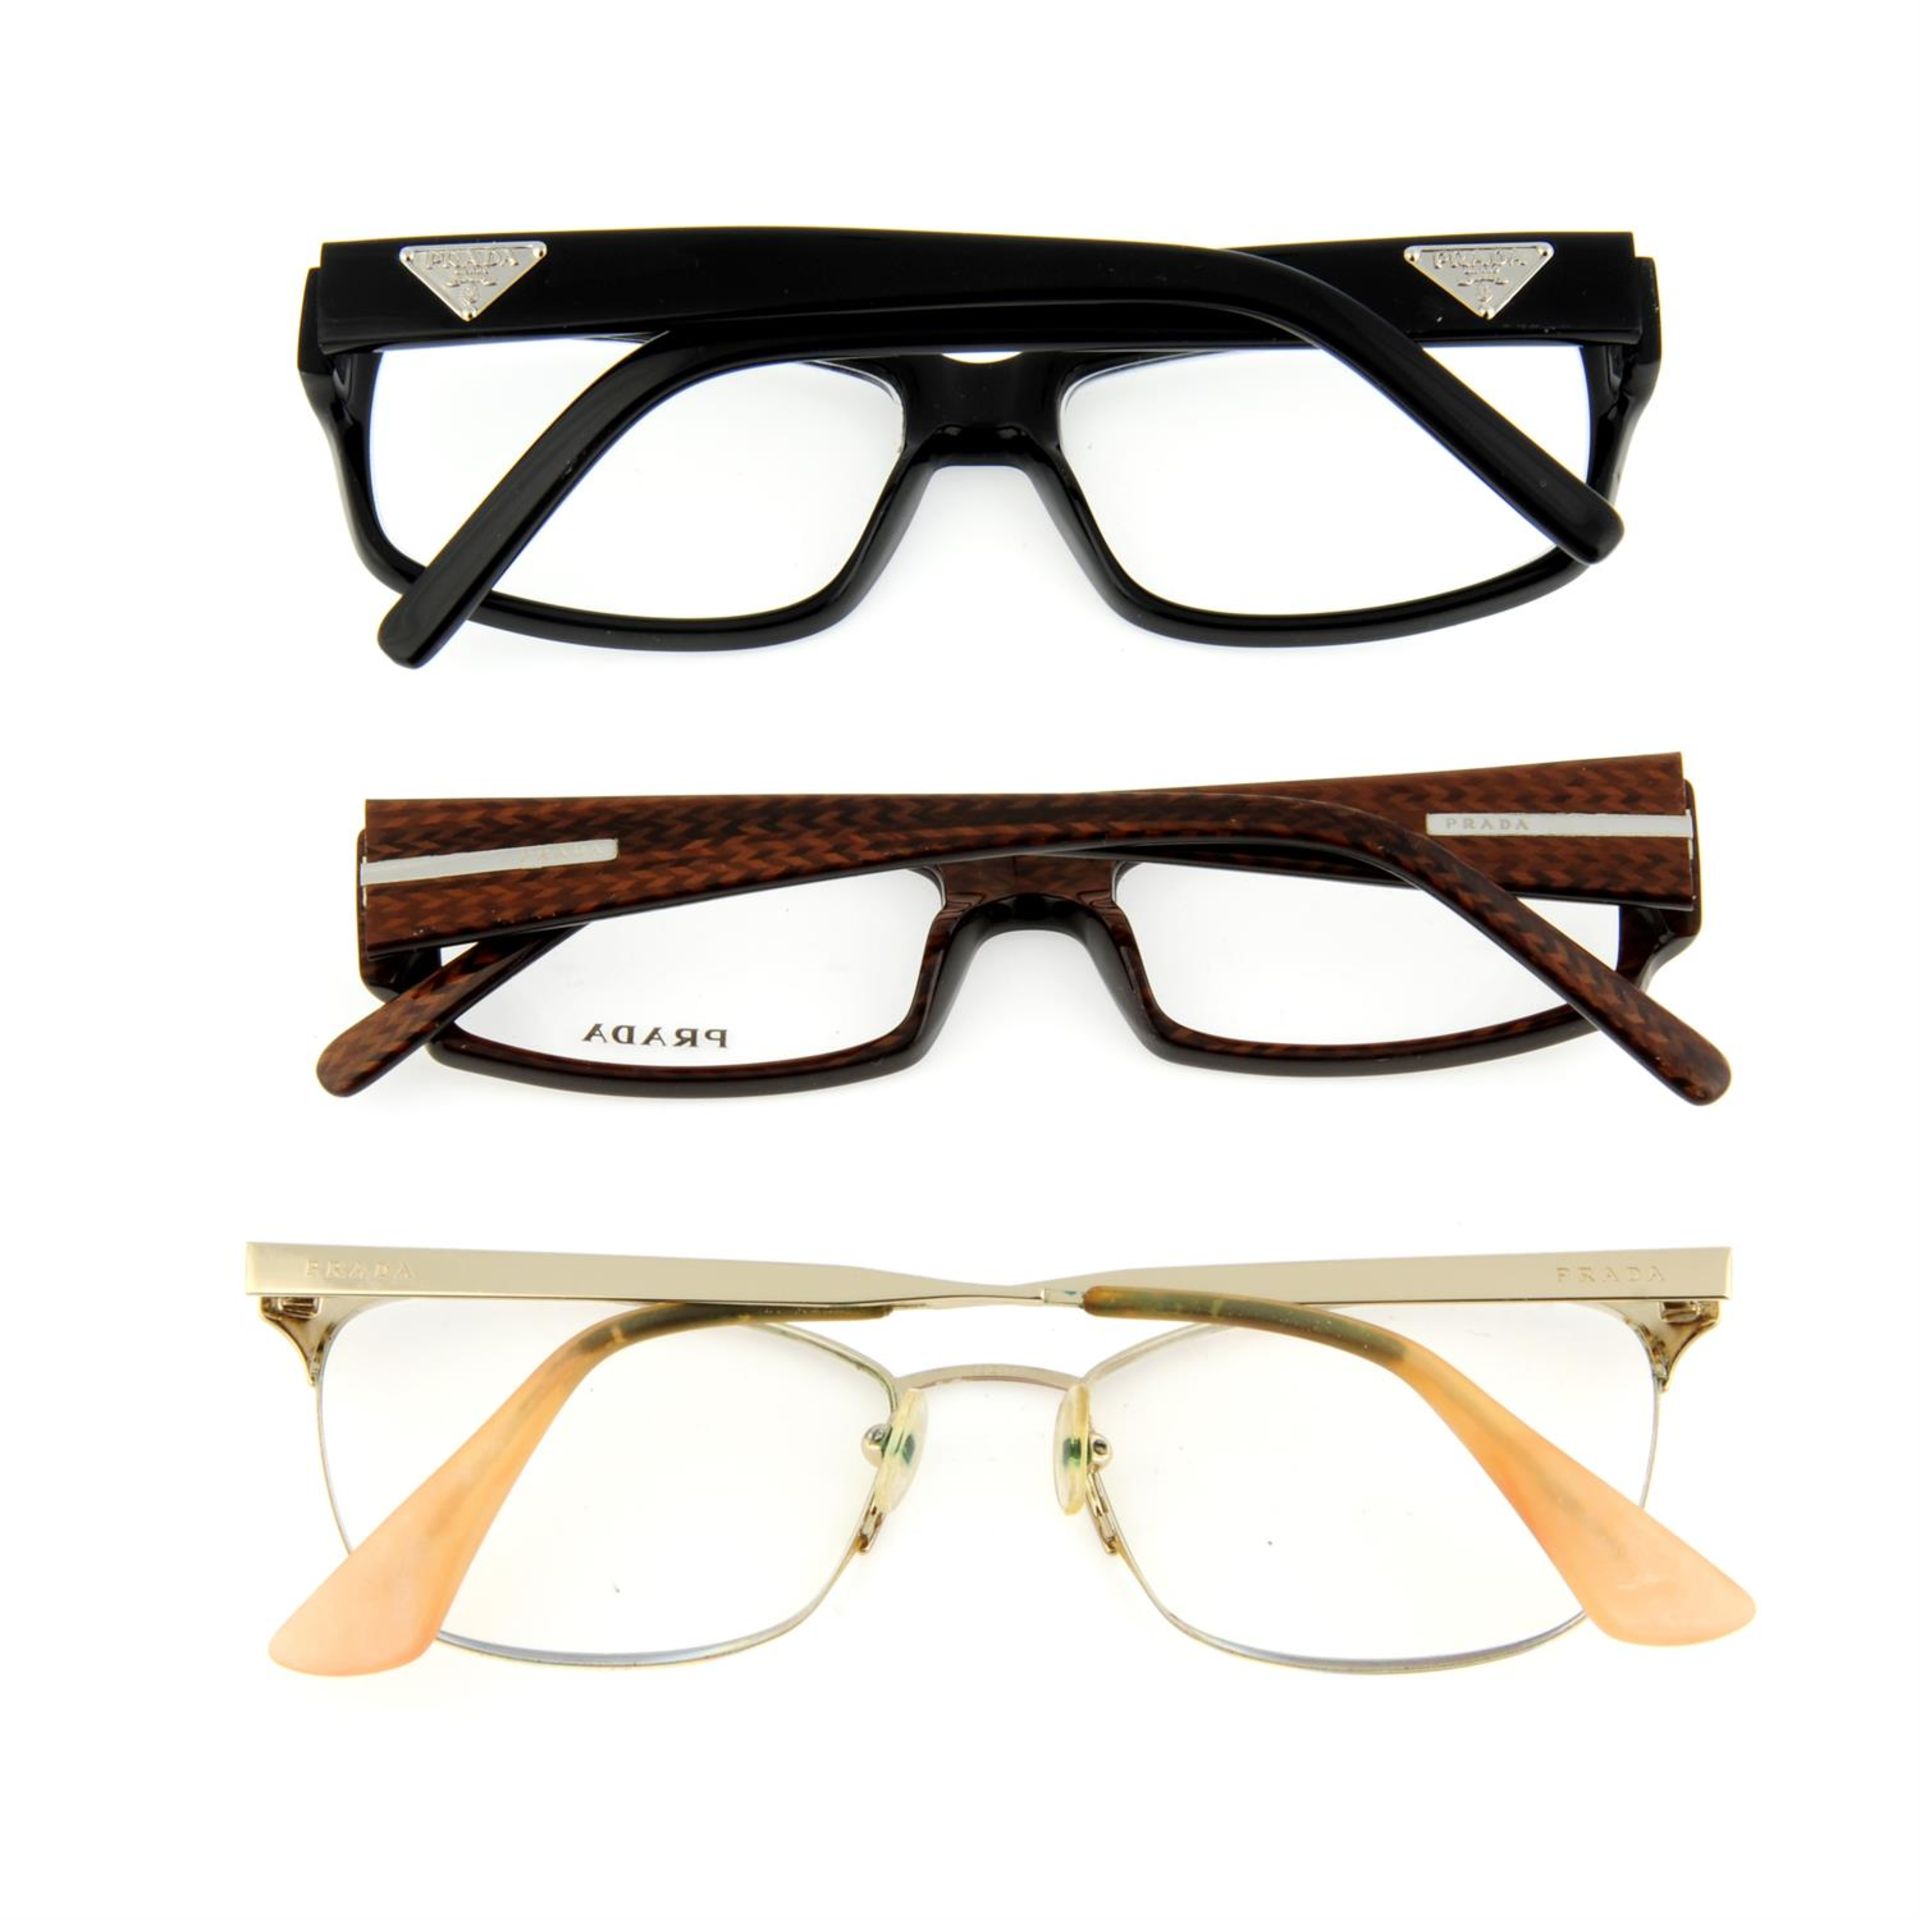 PRADA - three pairs of prescription glasses. - Image 2 of 2